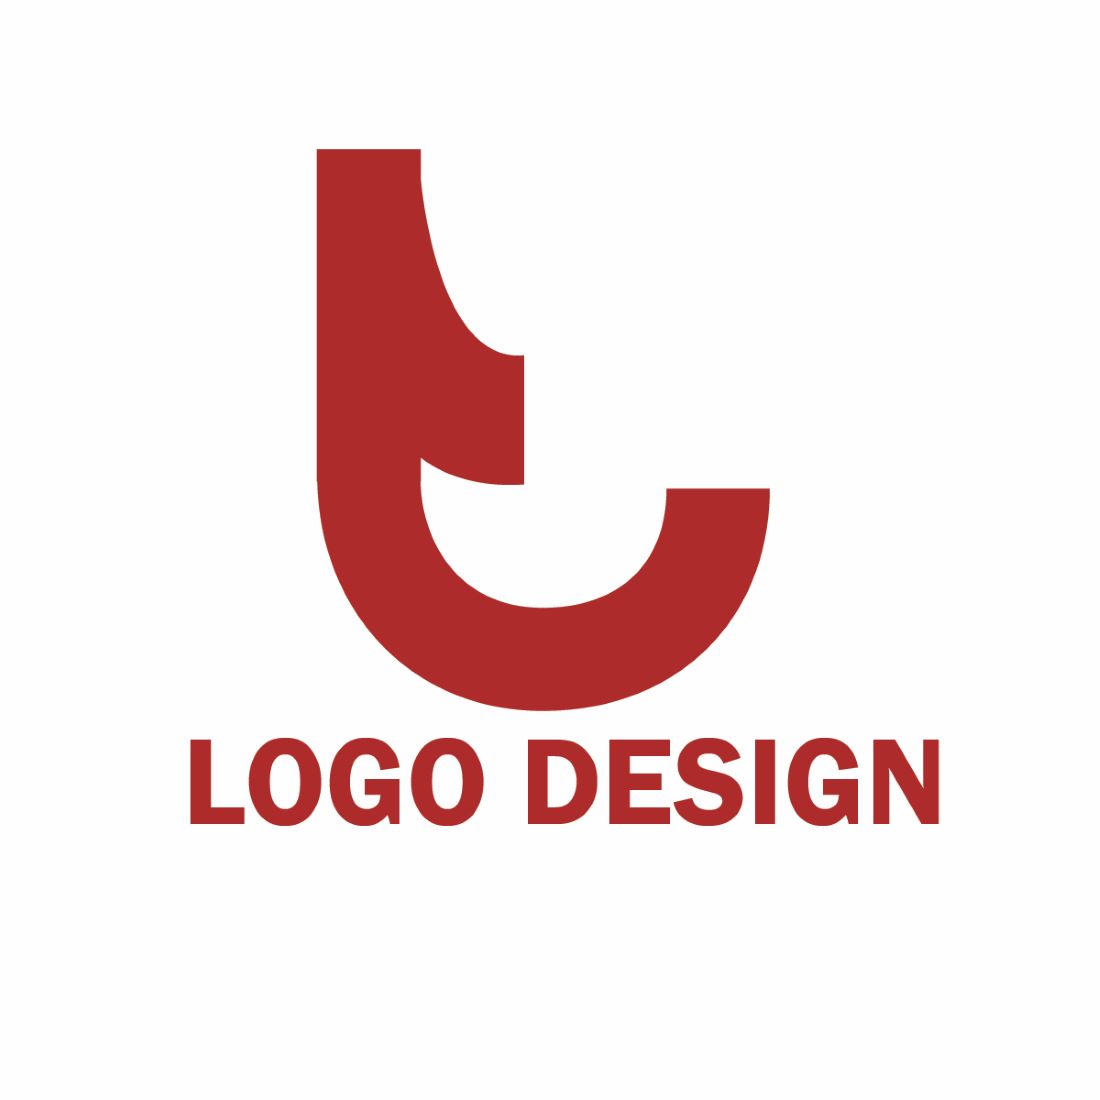 Minimalistic Logo Design with white background.